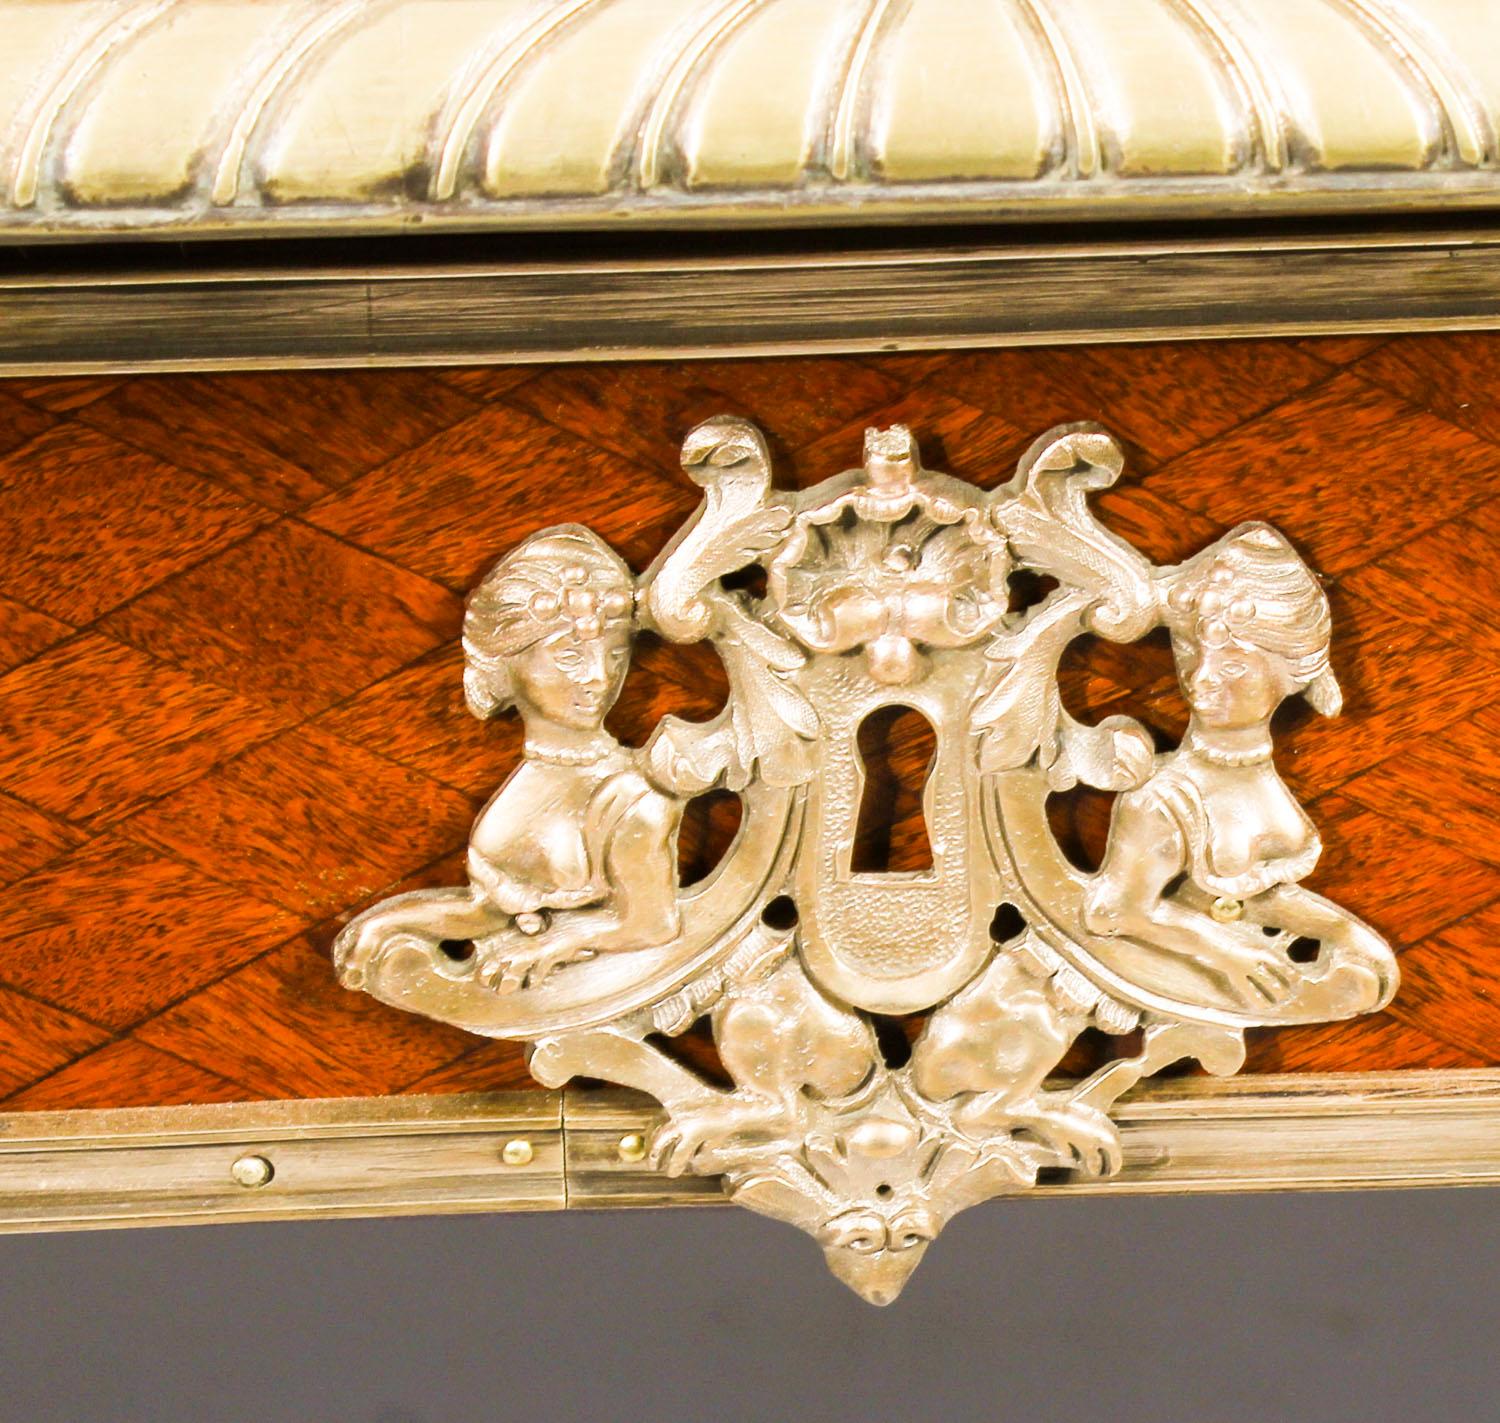 Leather Antique French Ormolu-Mounted Parquetry Bureau Plat Desk 19th Century